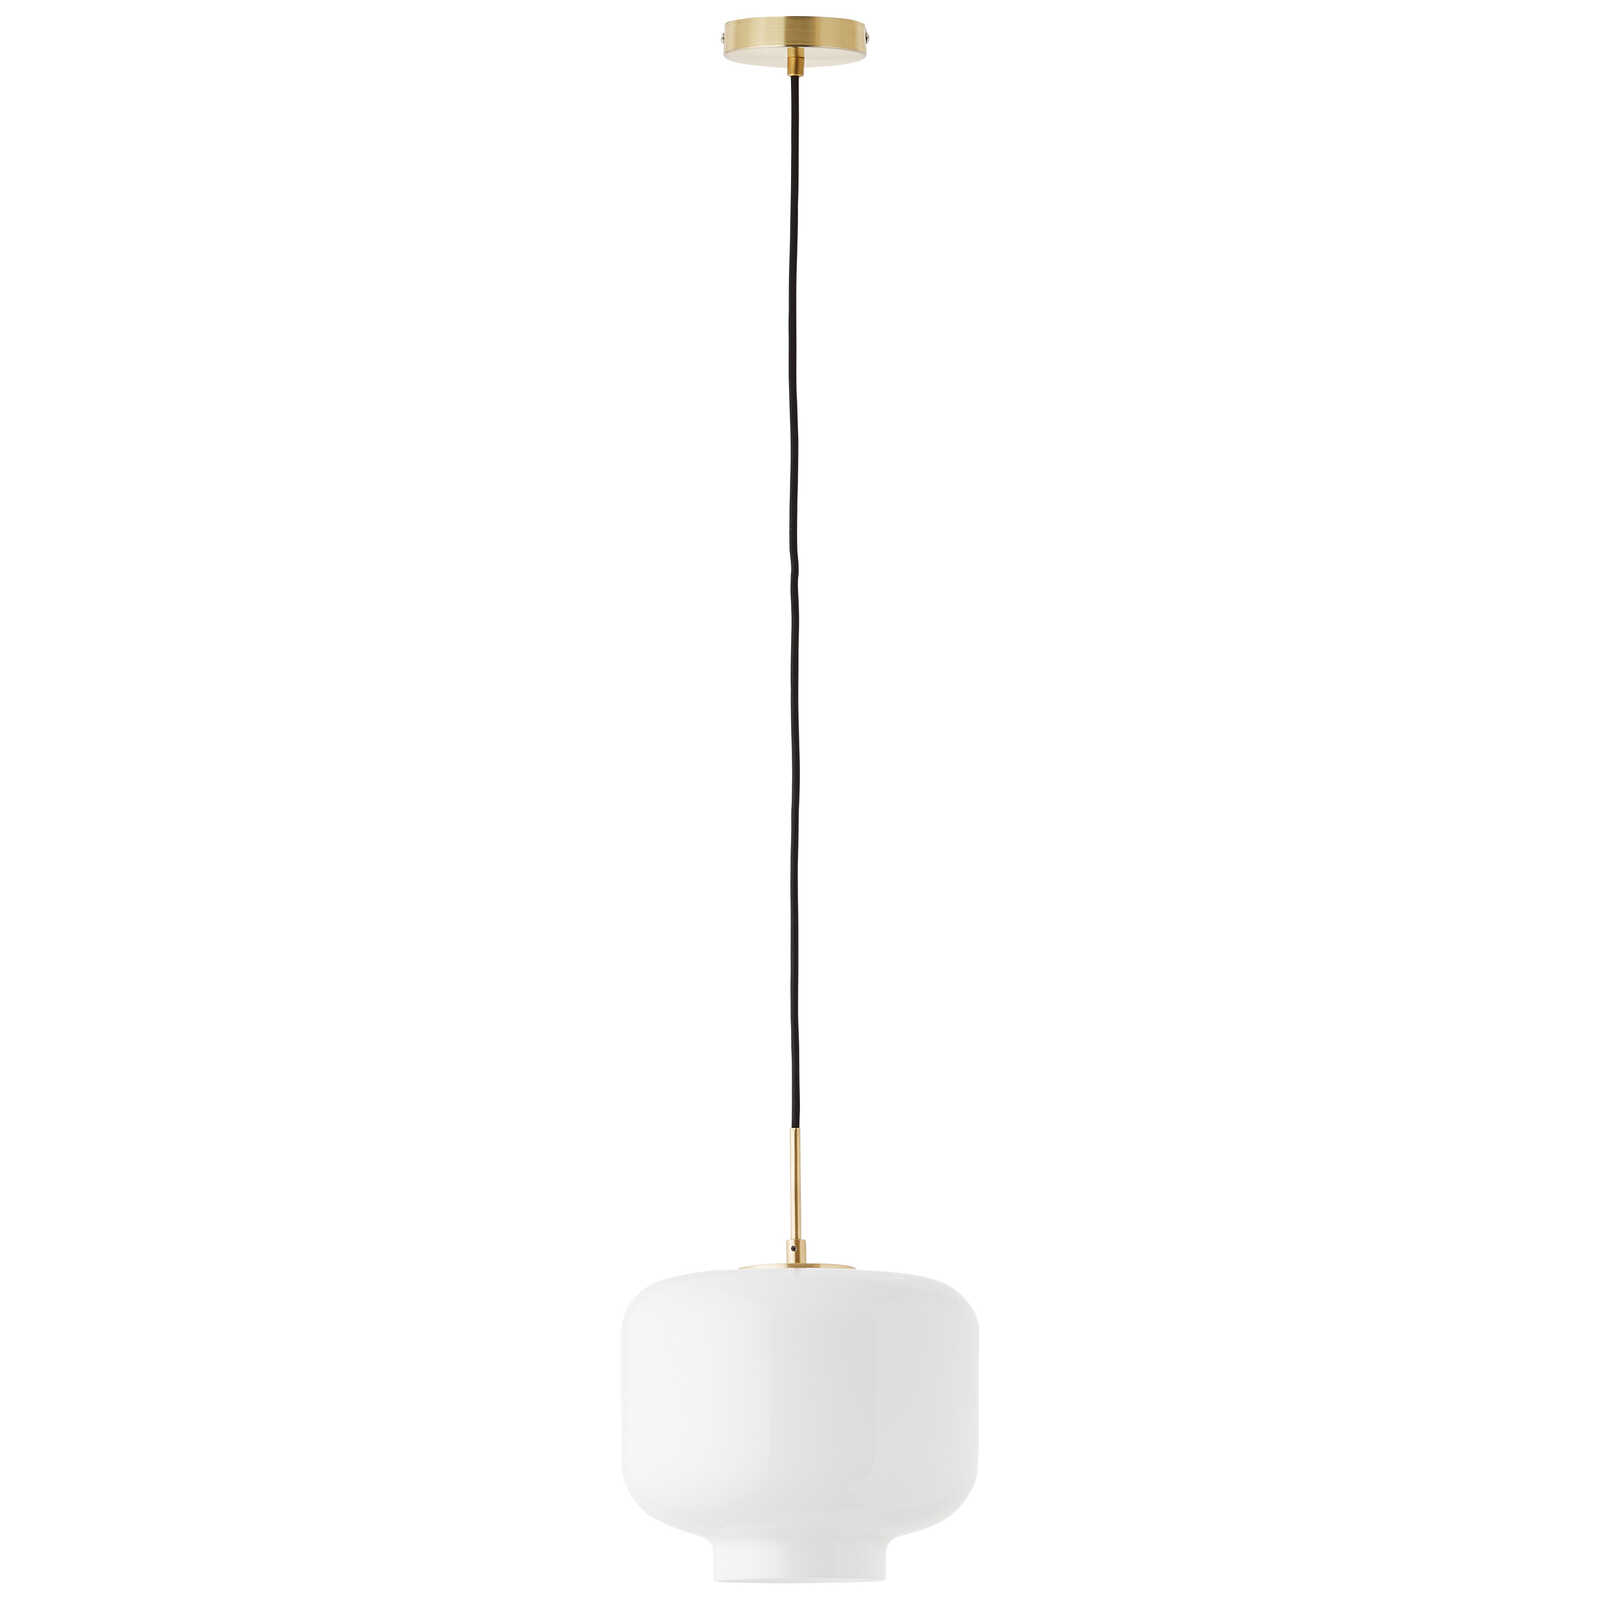             Glazen hanglamp - Keno 1 - Goud
        